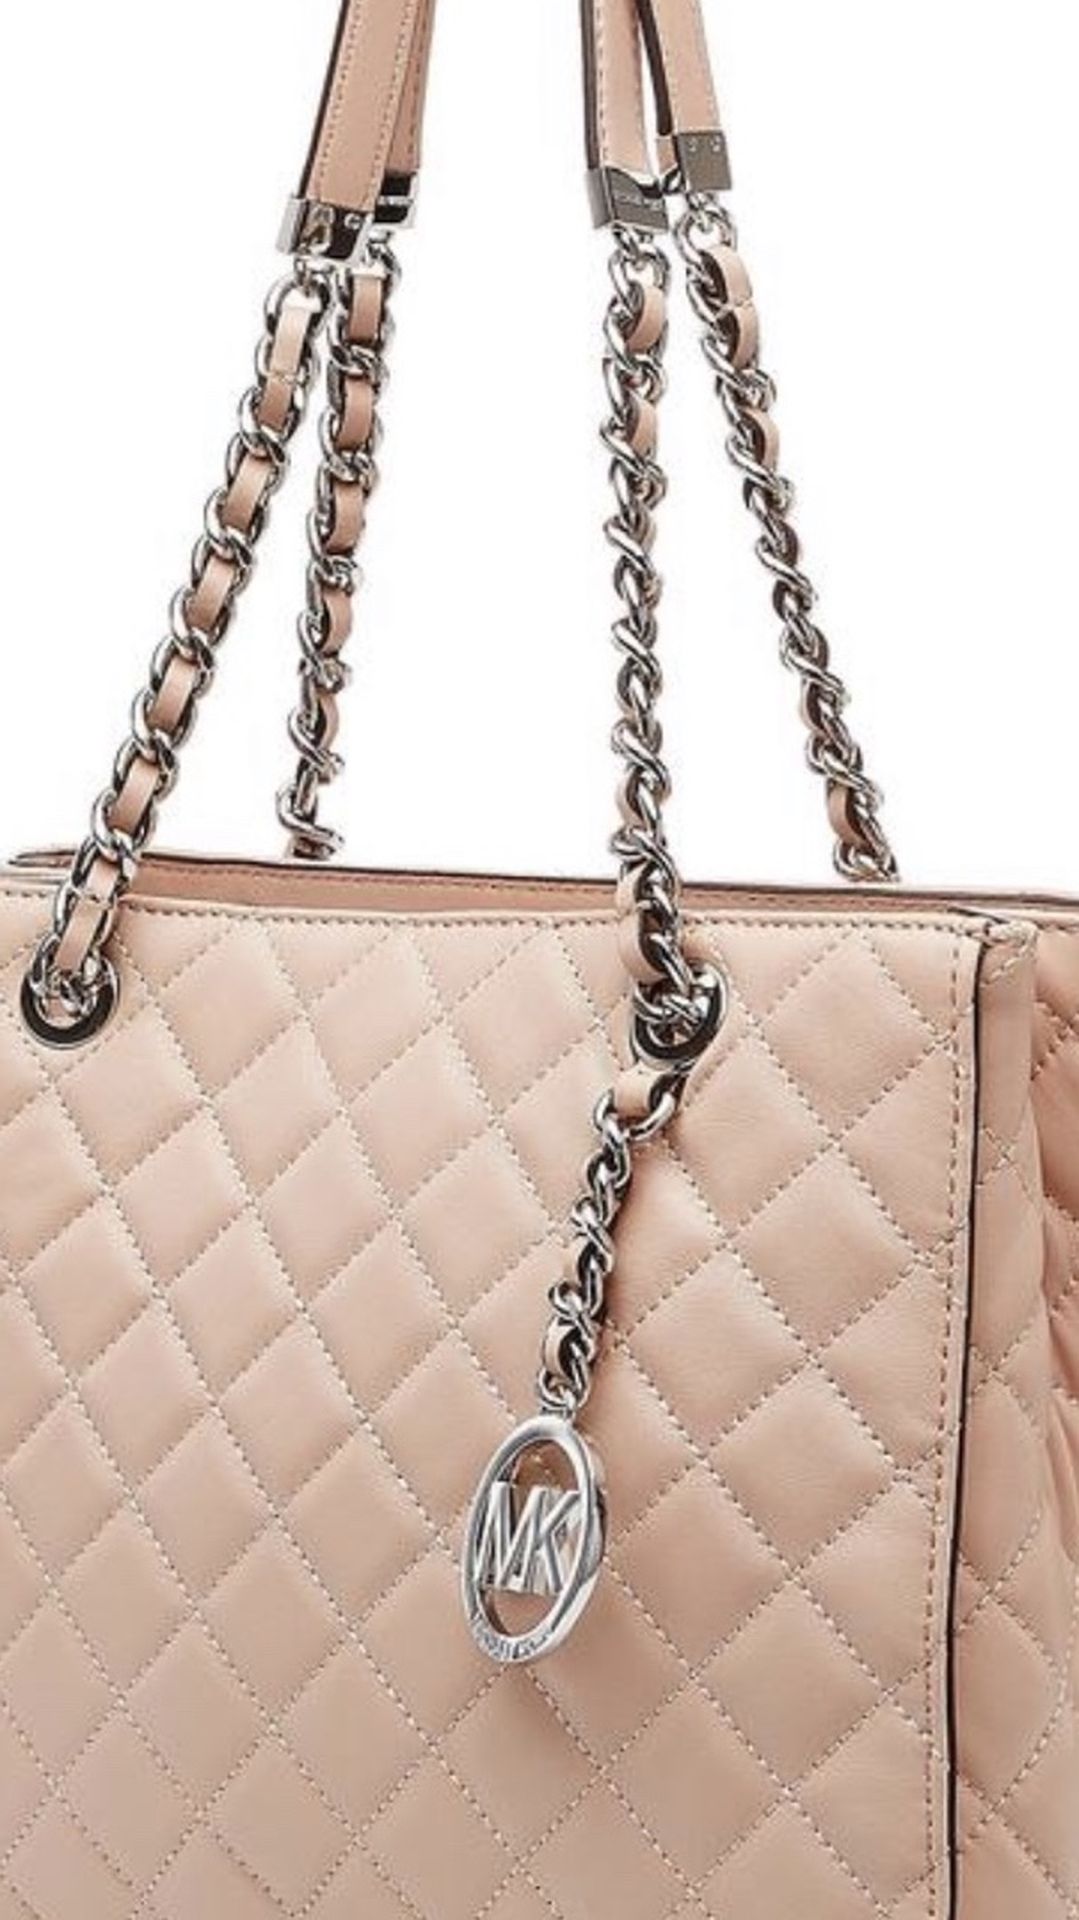 Michael Kors Susannah blush leather tote bag purse